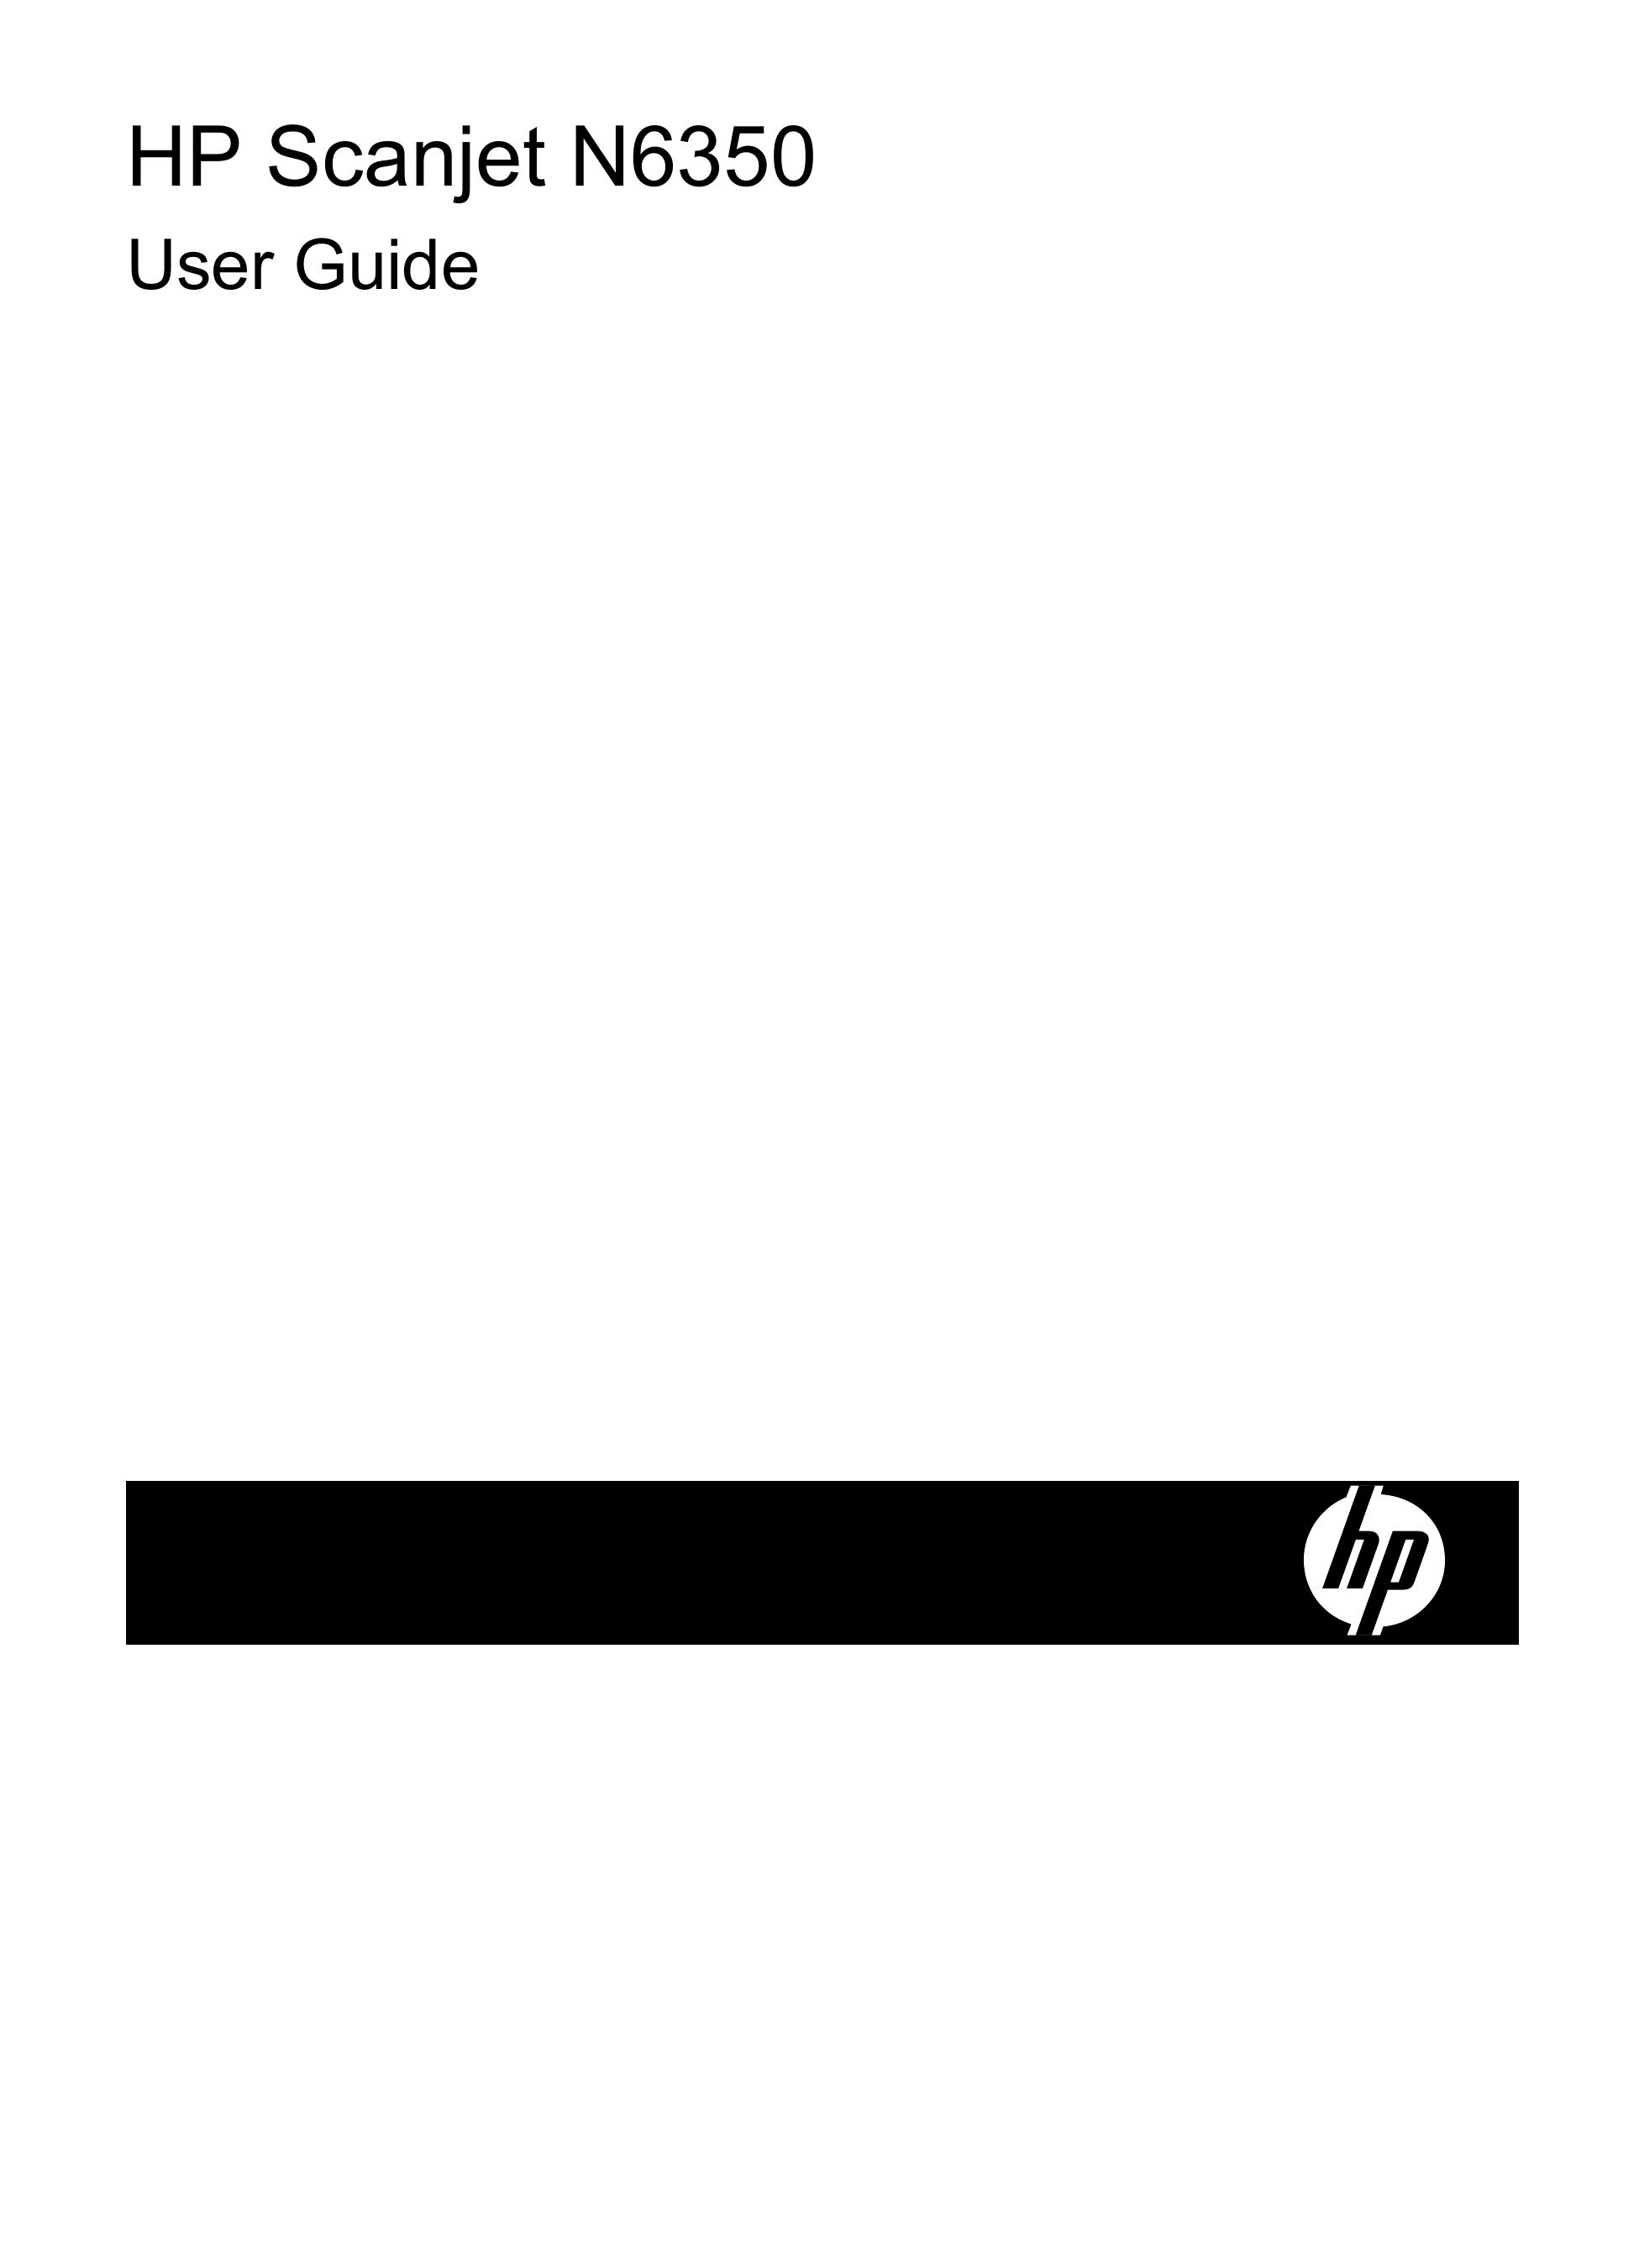 HP (Hewlett-Packard) N6350 Photo Scanner User Manual